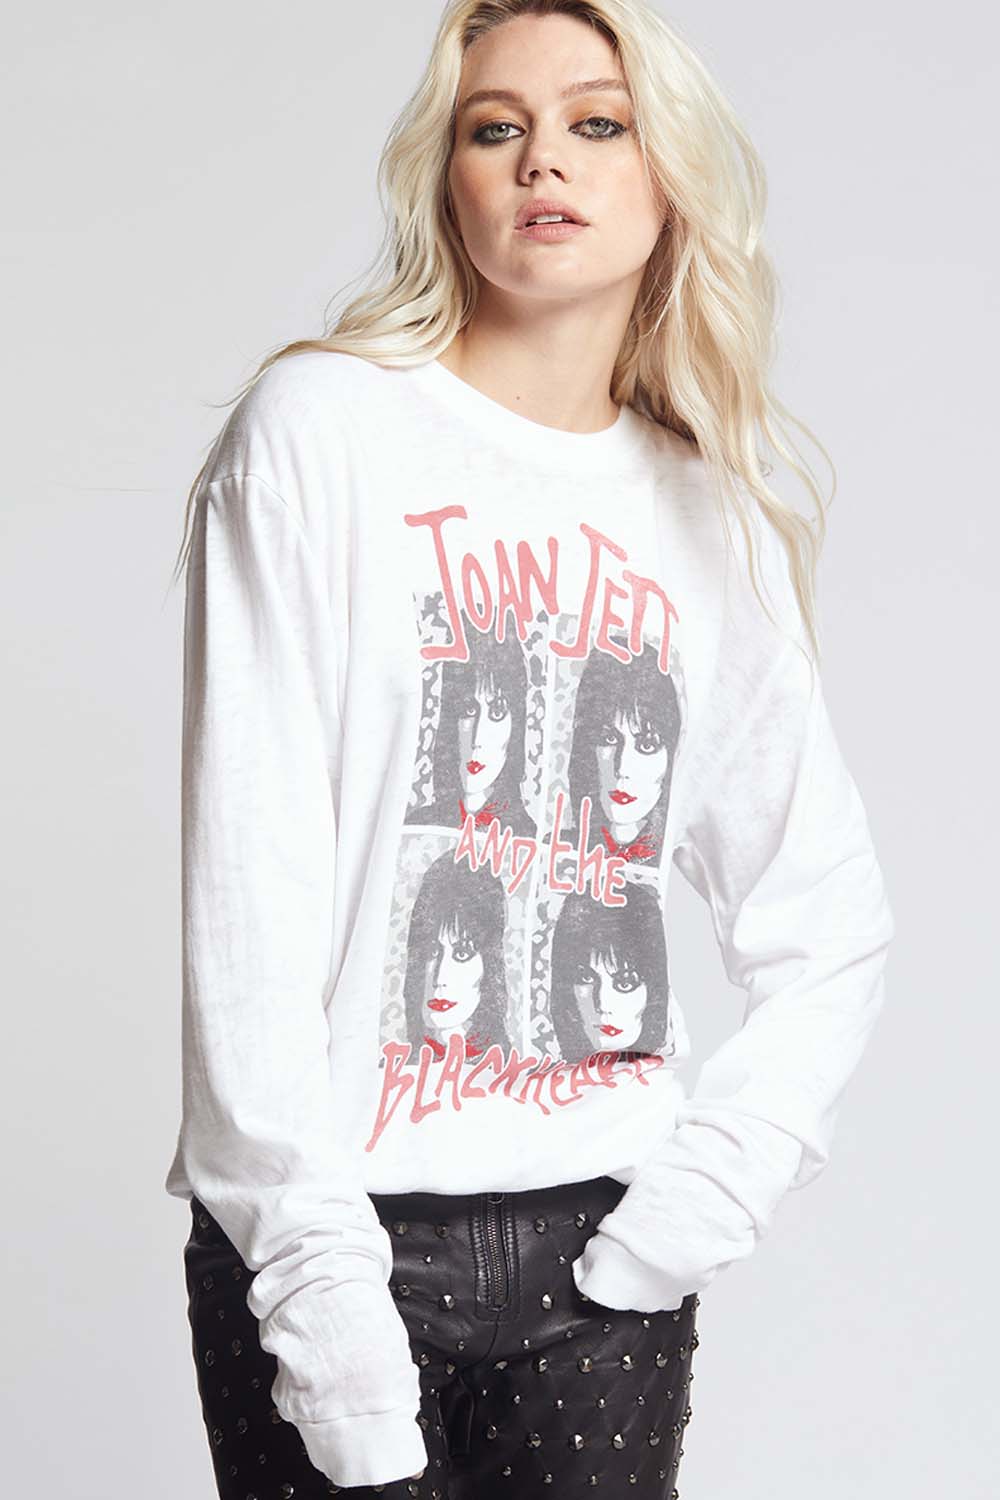 Joan Jett And The Blackhearts Fitted Sweatshirt